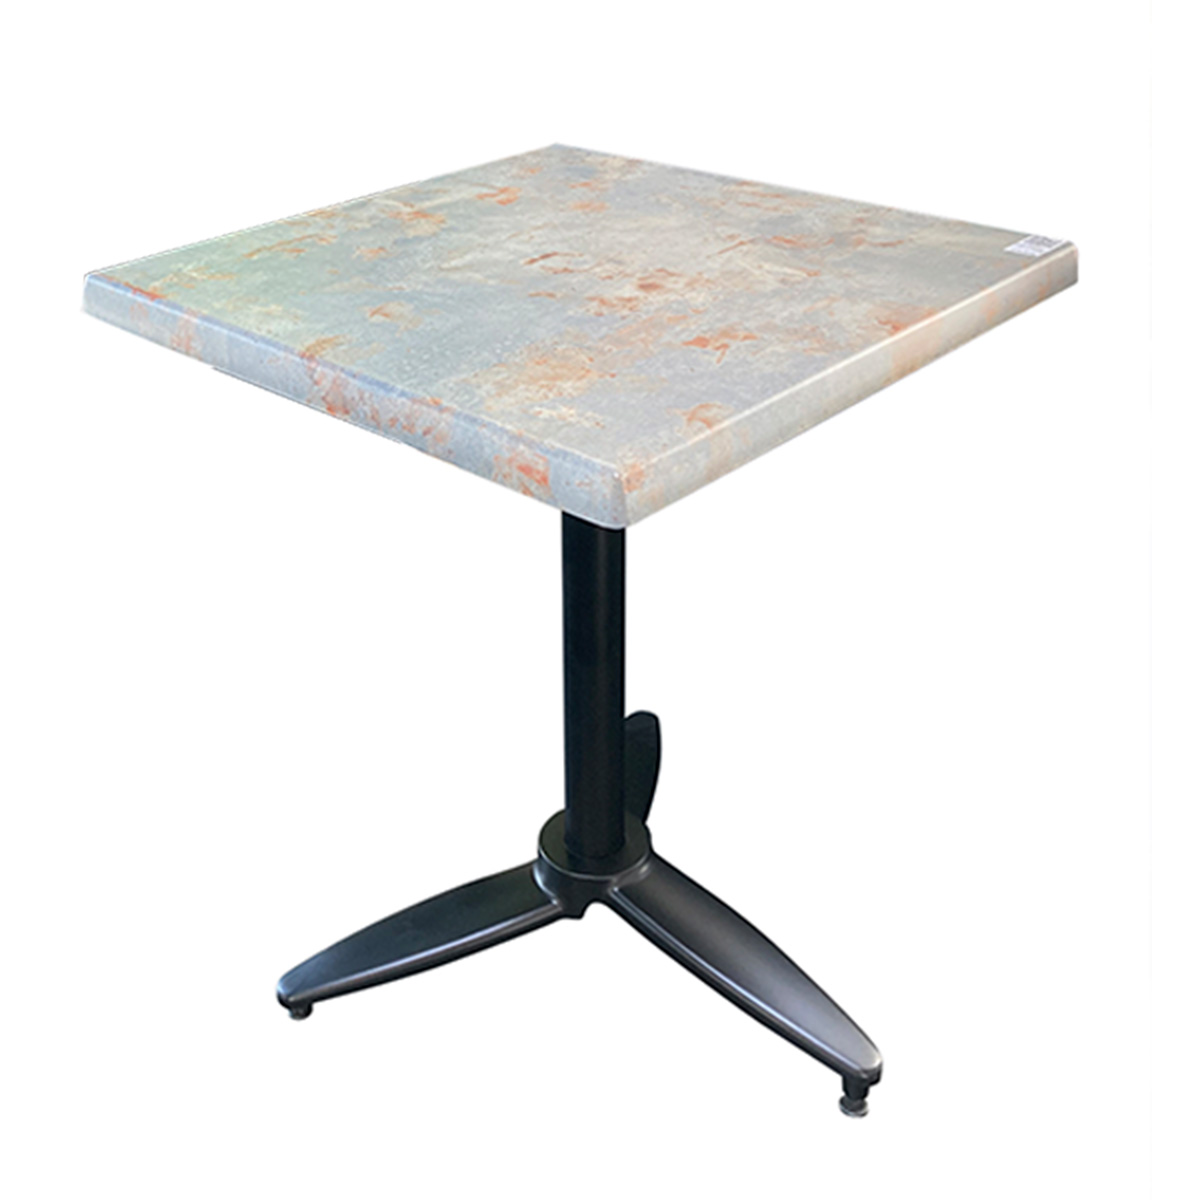 WERZALIT - Rust sølv bordplade firkantet - 60x60cm